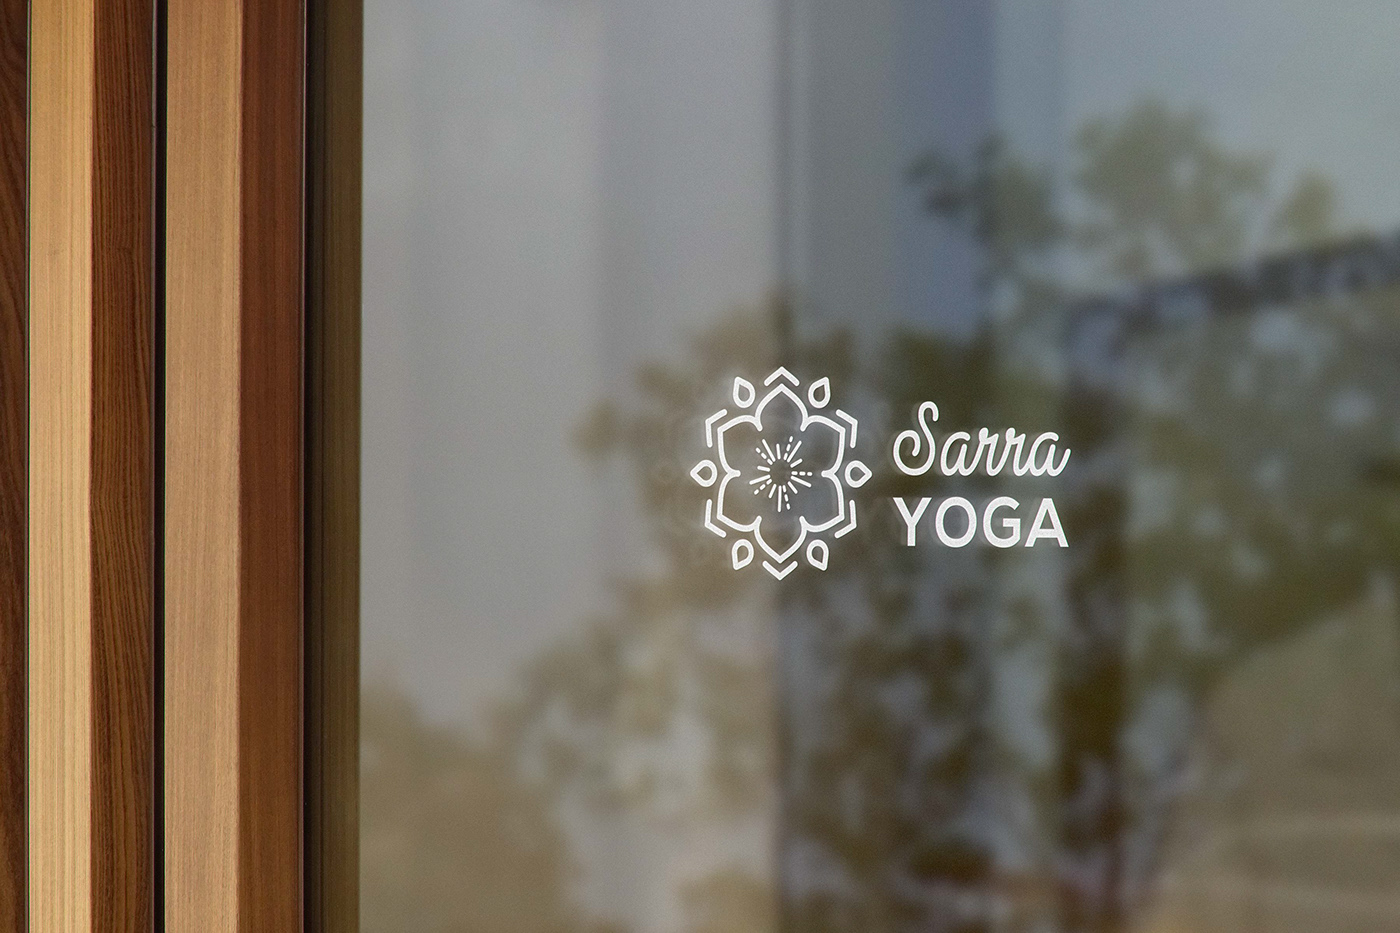 Sarra Yoga logo on the studio window